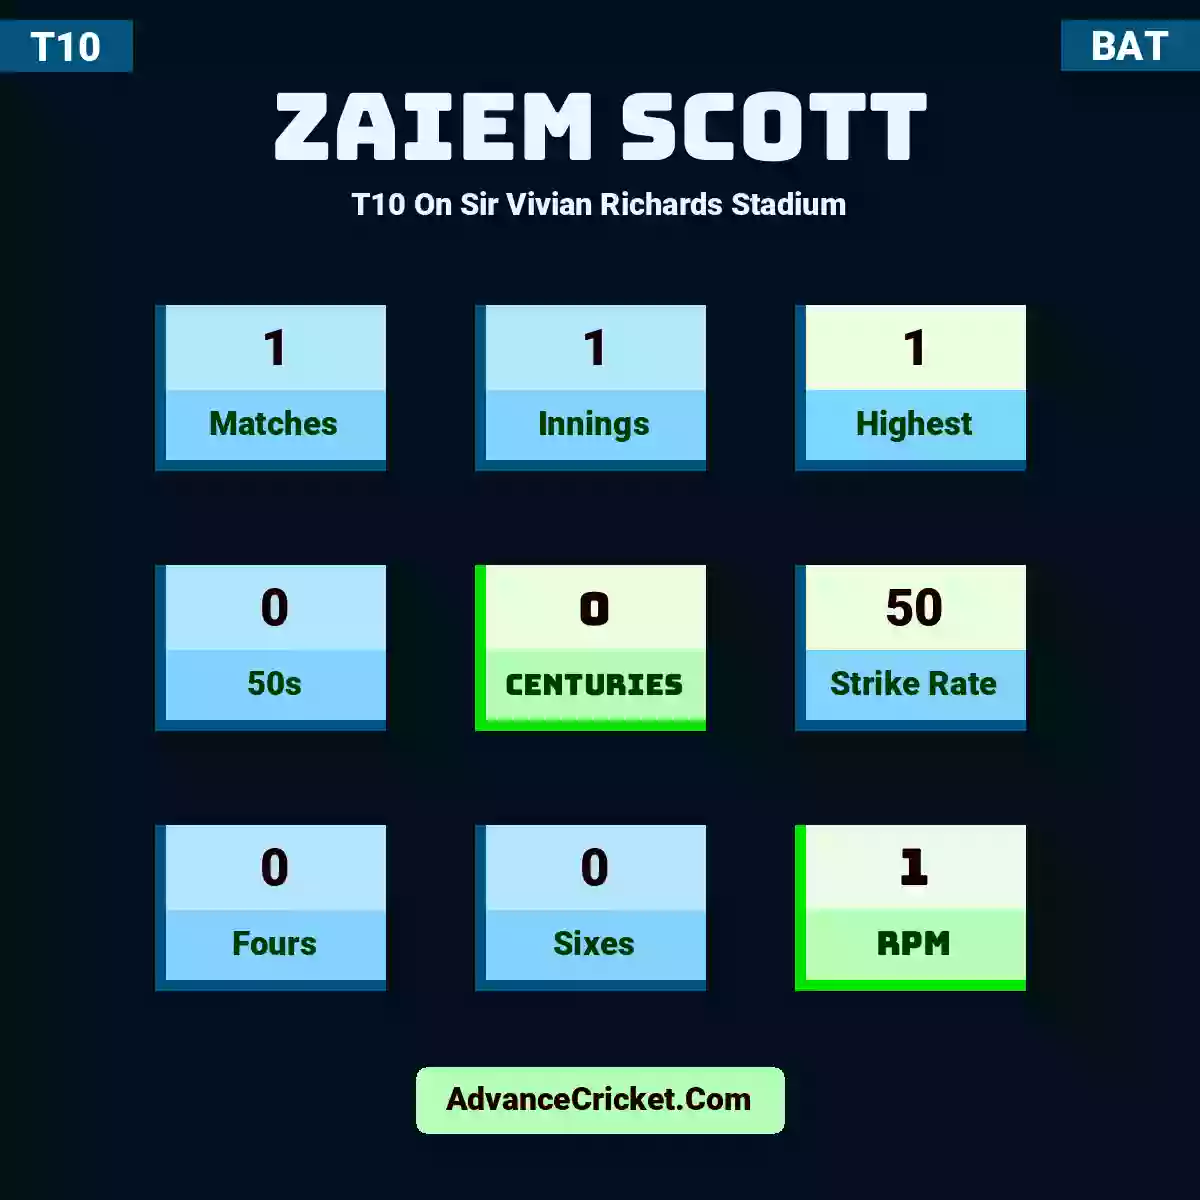 Zaiem Scott T10  On Sir Vivian Richards Stadium, Zaiem Scott played 1 matches, scored 1 runs as highest, 0 half-centuries, and 0 centuries, with a strike rate of 50. Z.Scott hit 0 fours and 0 sixes, with an RPM of 1.